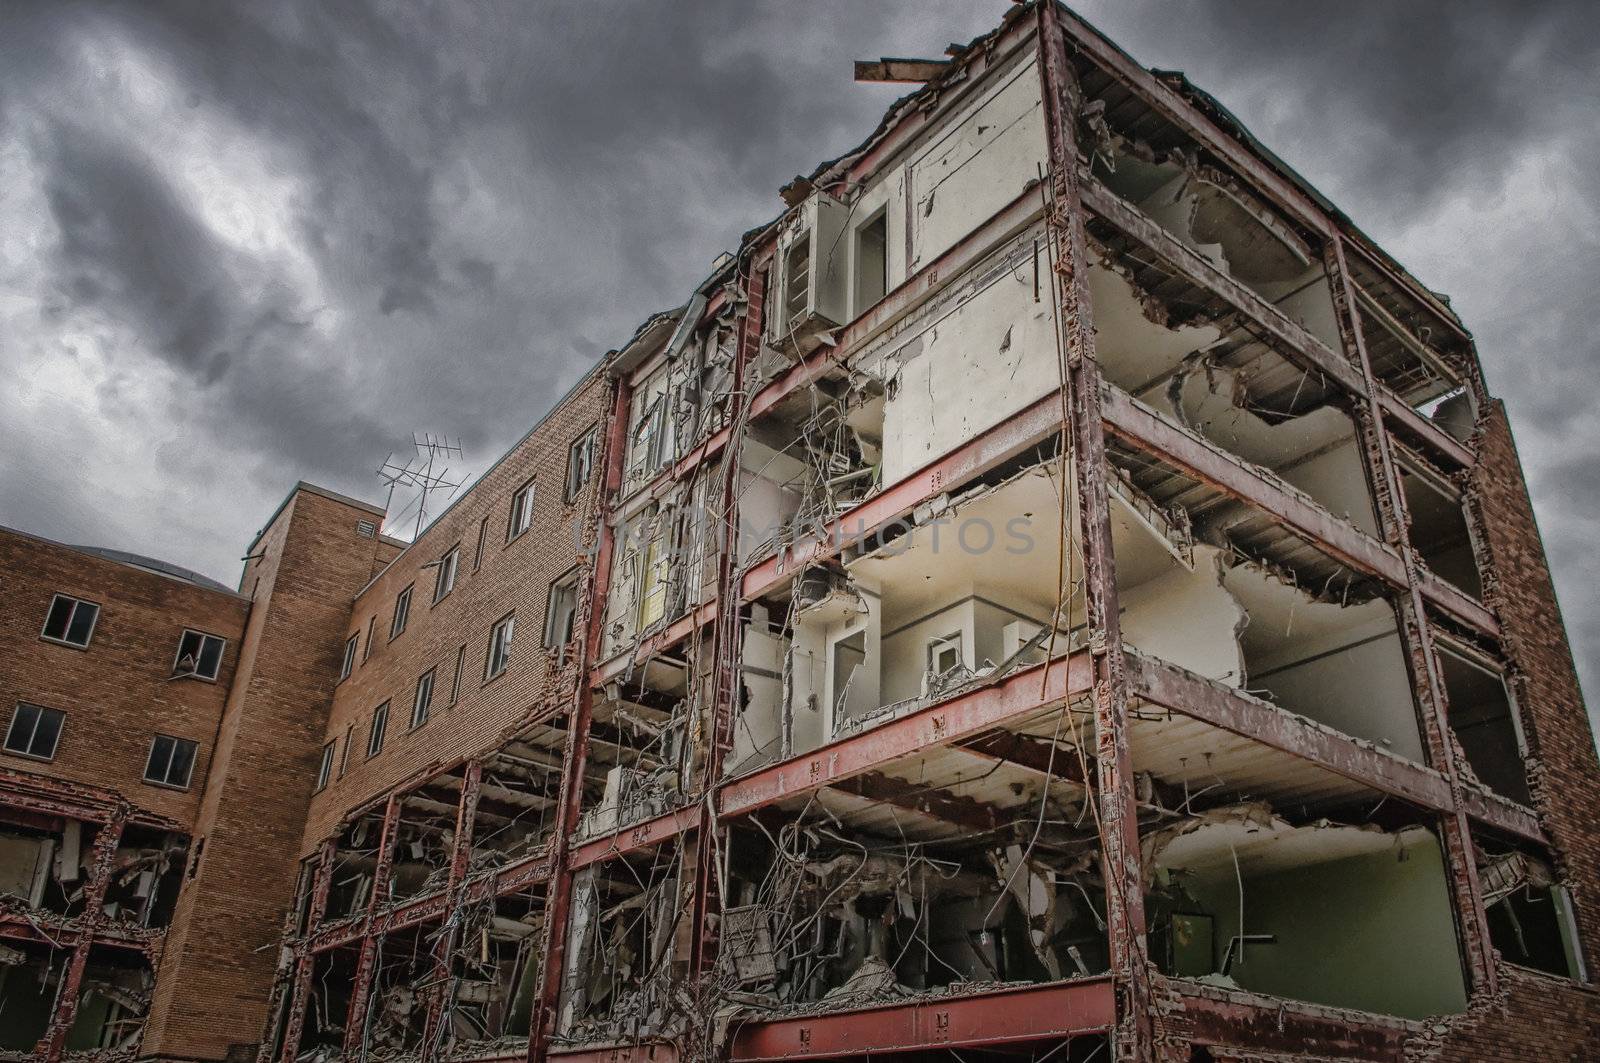 Demolition on a Rainy Day by watamyr